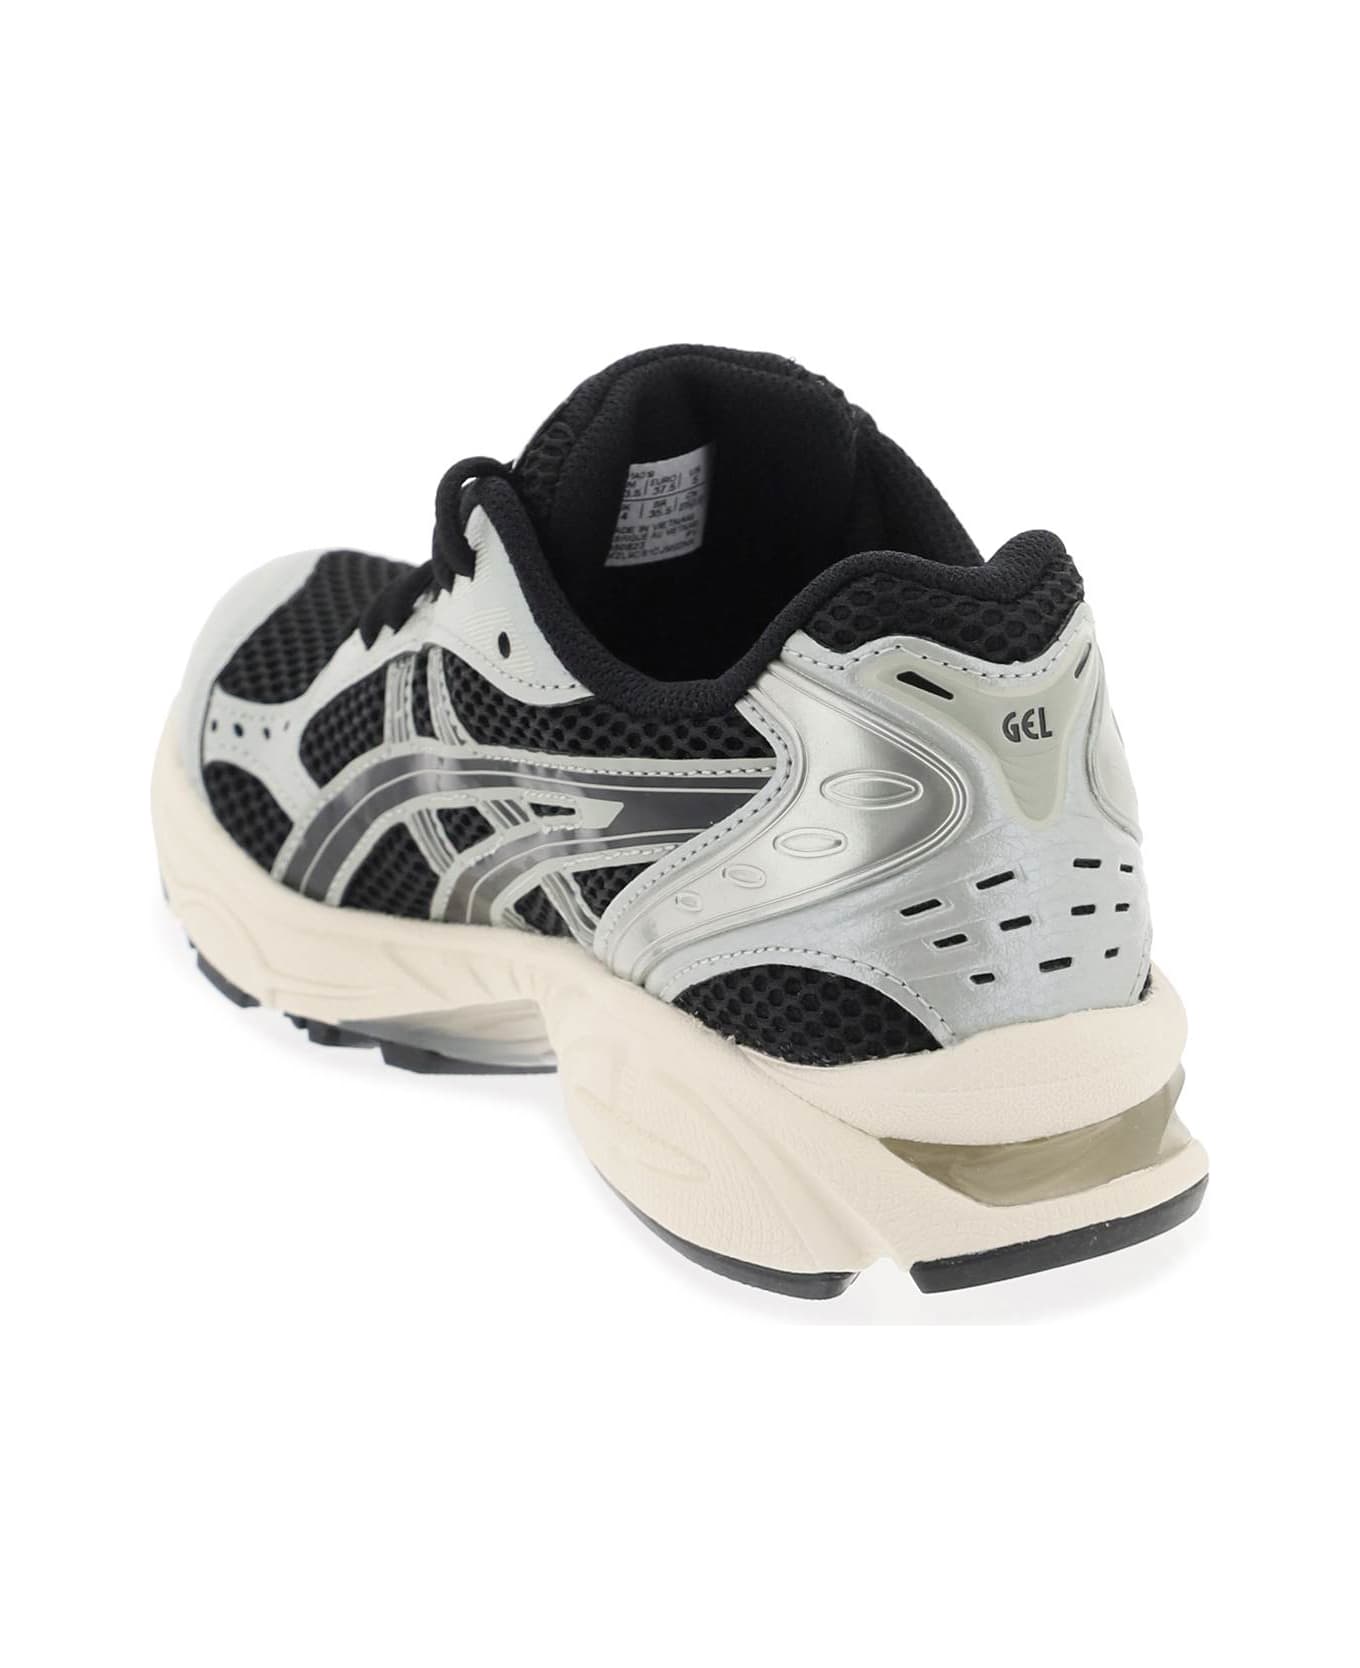 Asics Gel-kayano 14 Sneakers - BLACK SEAL GREY (Grey) スニーカー